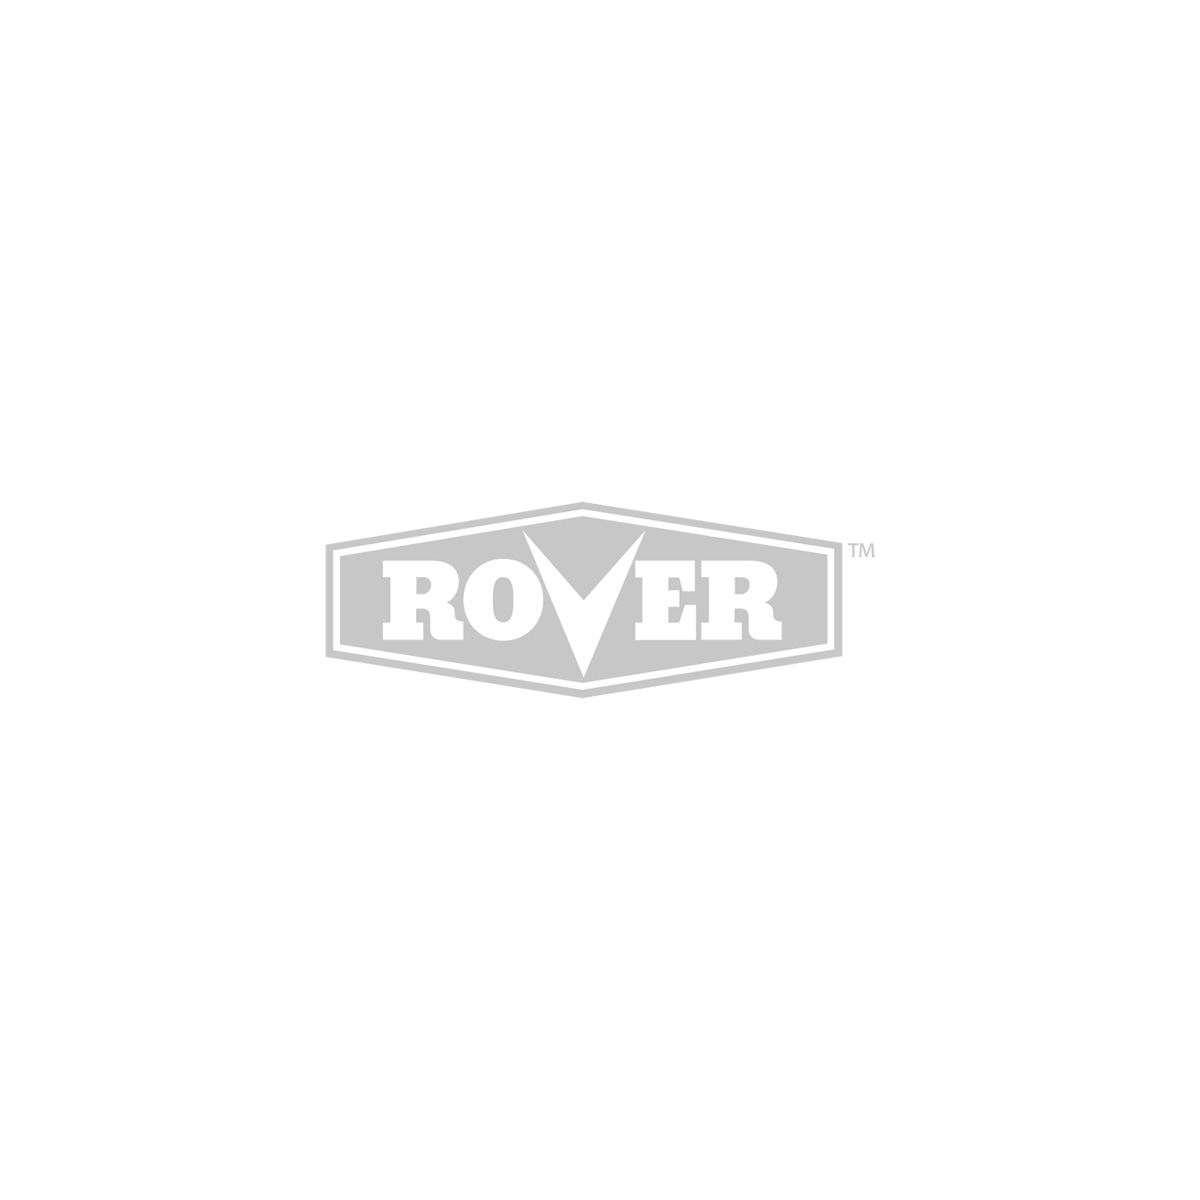 Blade - Rover B04T & Rover Utility Mower